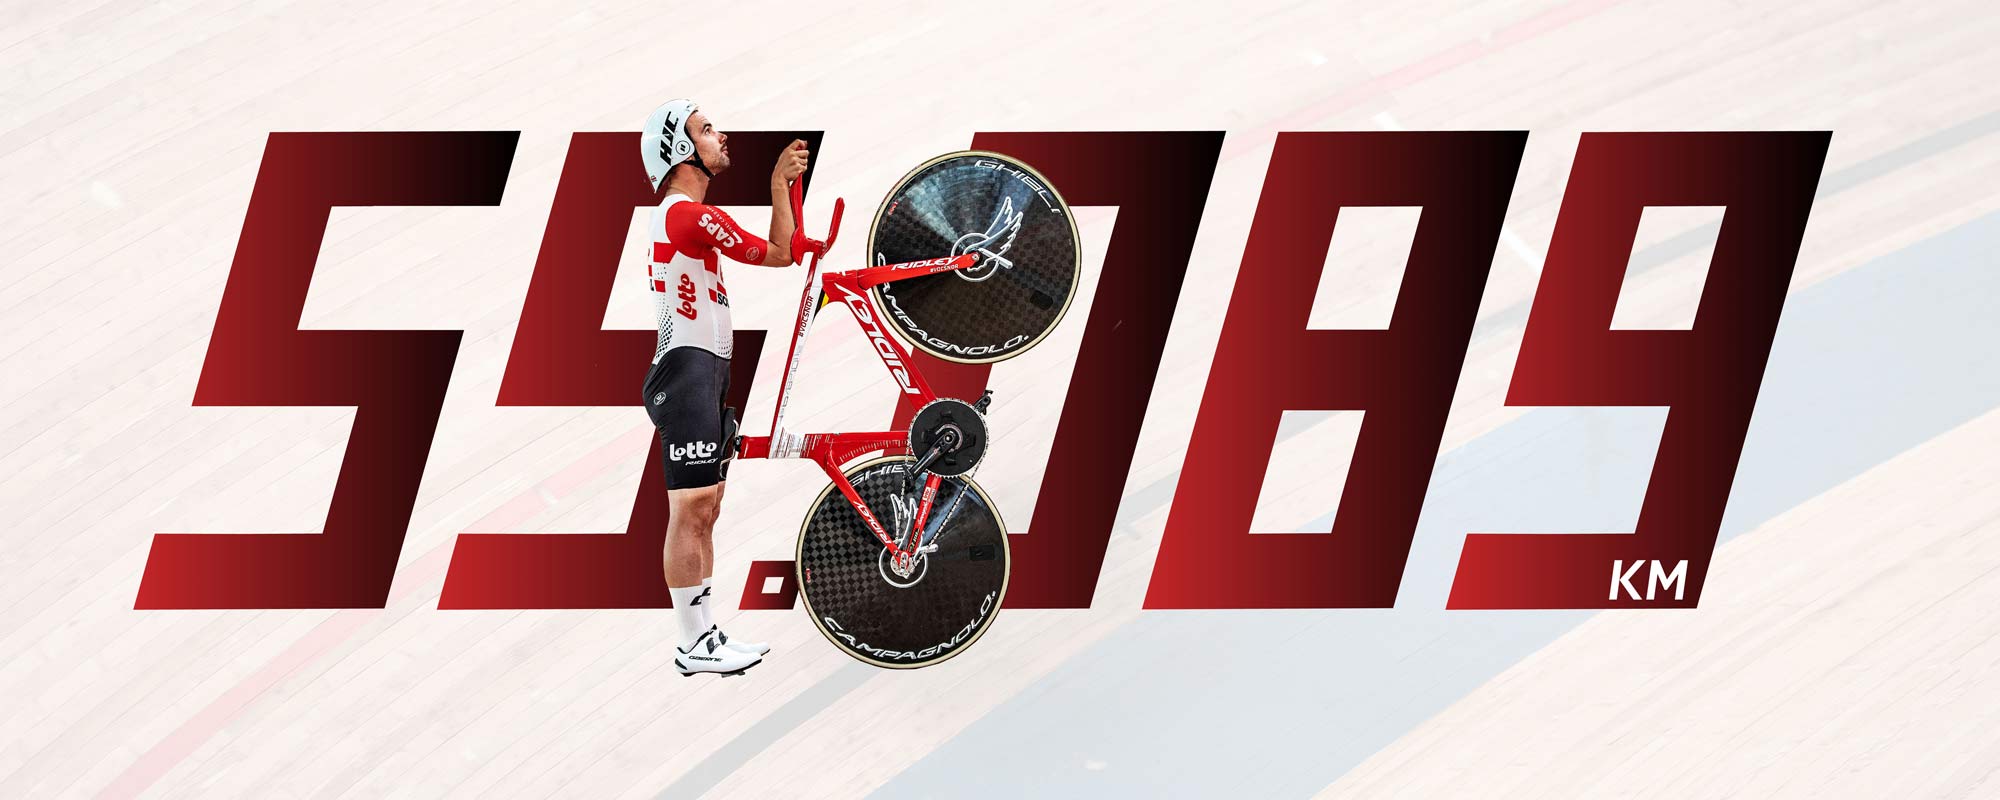 Victor-Campenaerts-Hour-Record_Ridley-Arena-TT_-custom-aero-track-bike_55089m-in-60-minutes.jpg